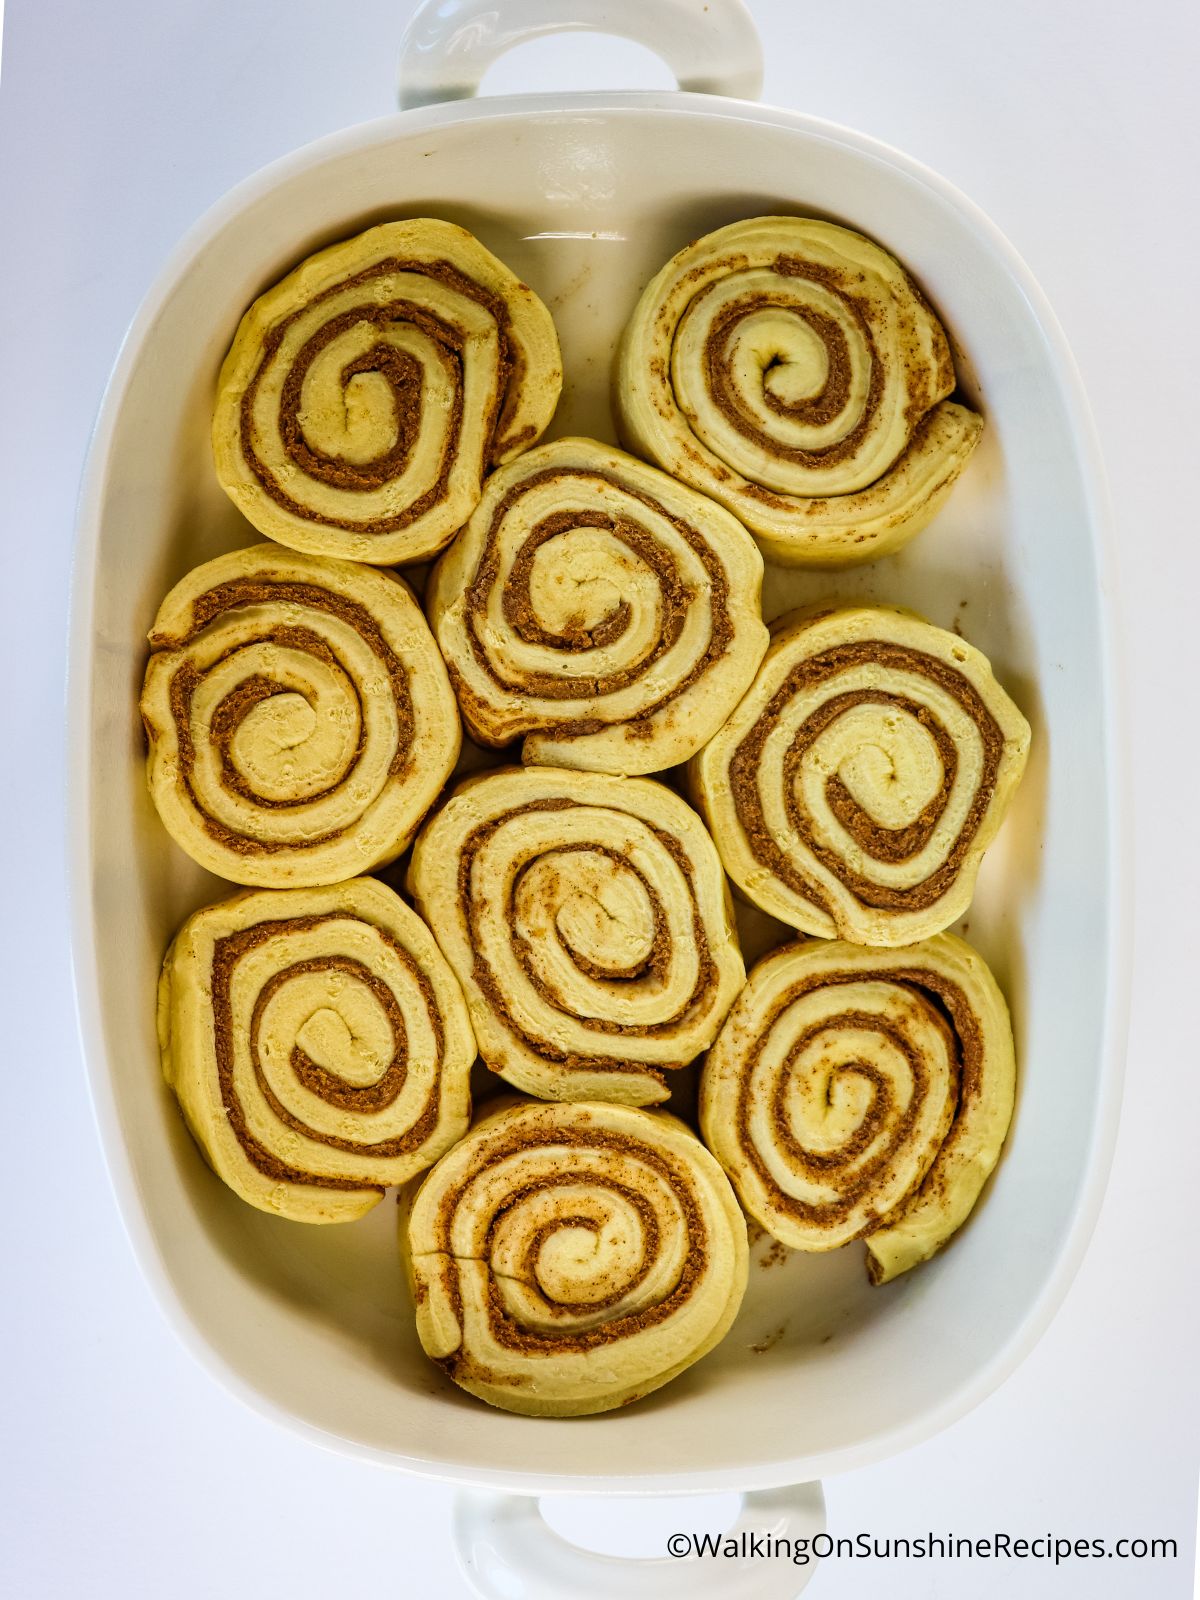 Cinnamon rolls in casserole dish.